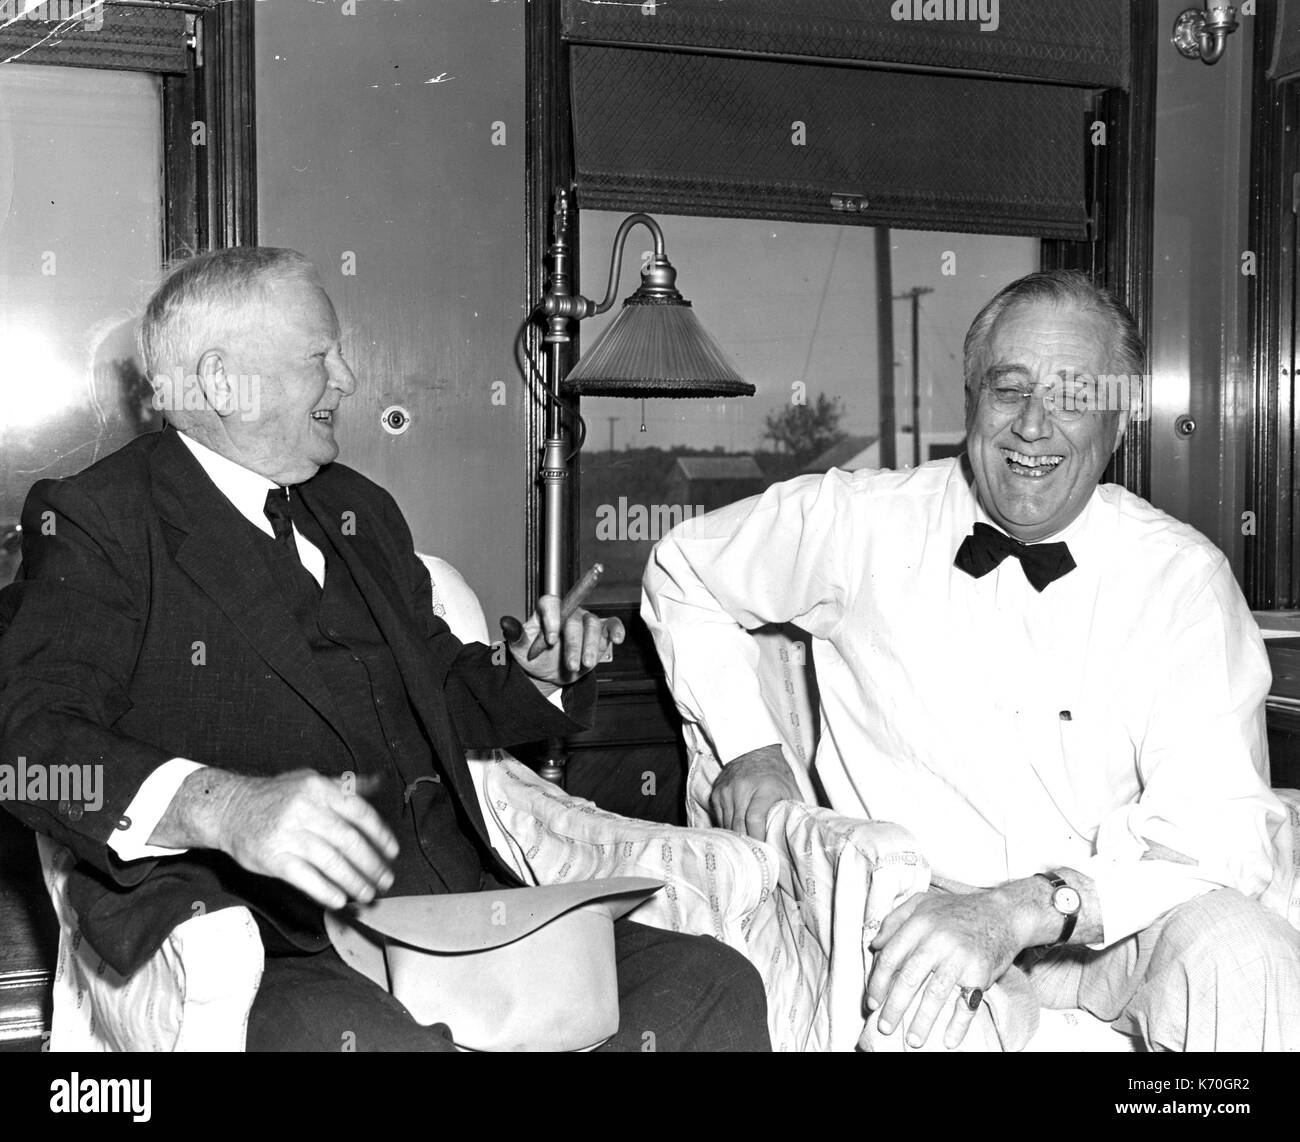 Uvalde, Texas - der ehemalige Vizepräsident John Nance Garner amüsiert Präsident Franklin D. Roosevelt. Uvalde, Texas, ca. 1942. Stockfoto